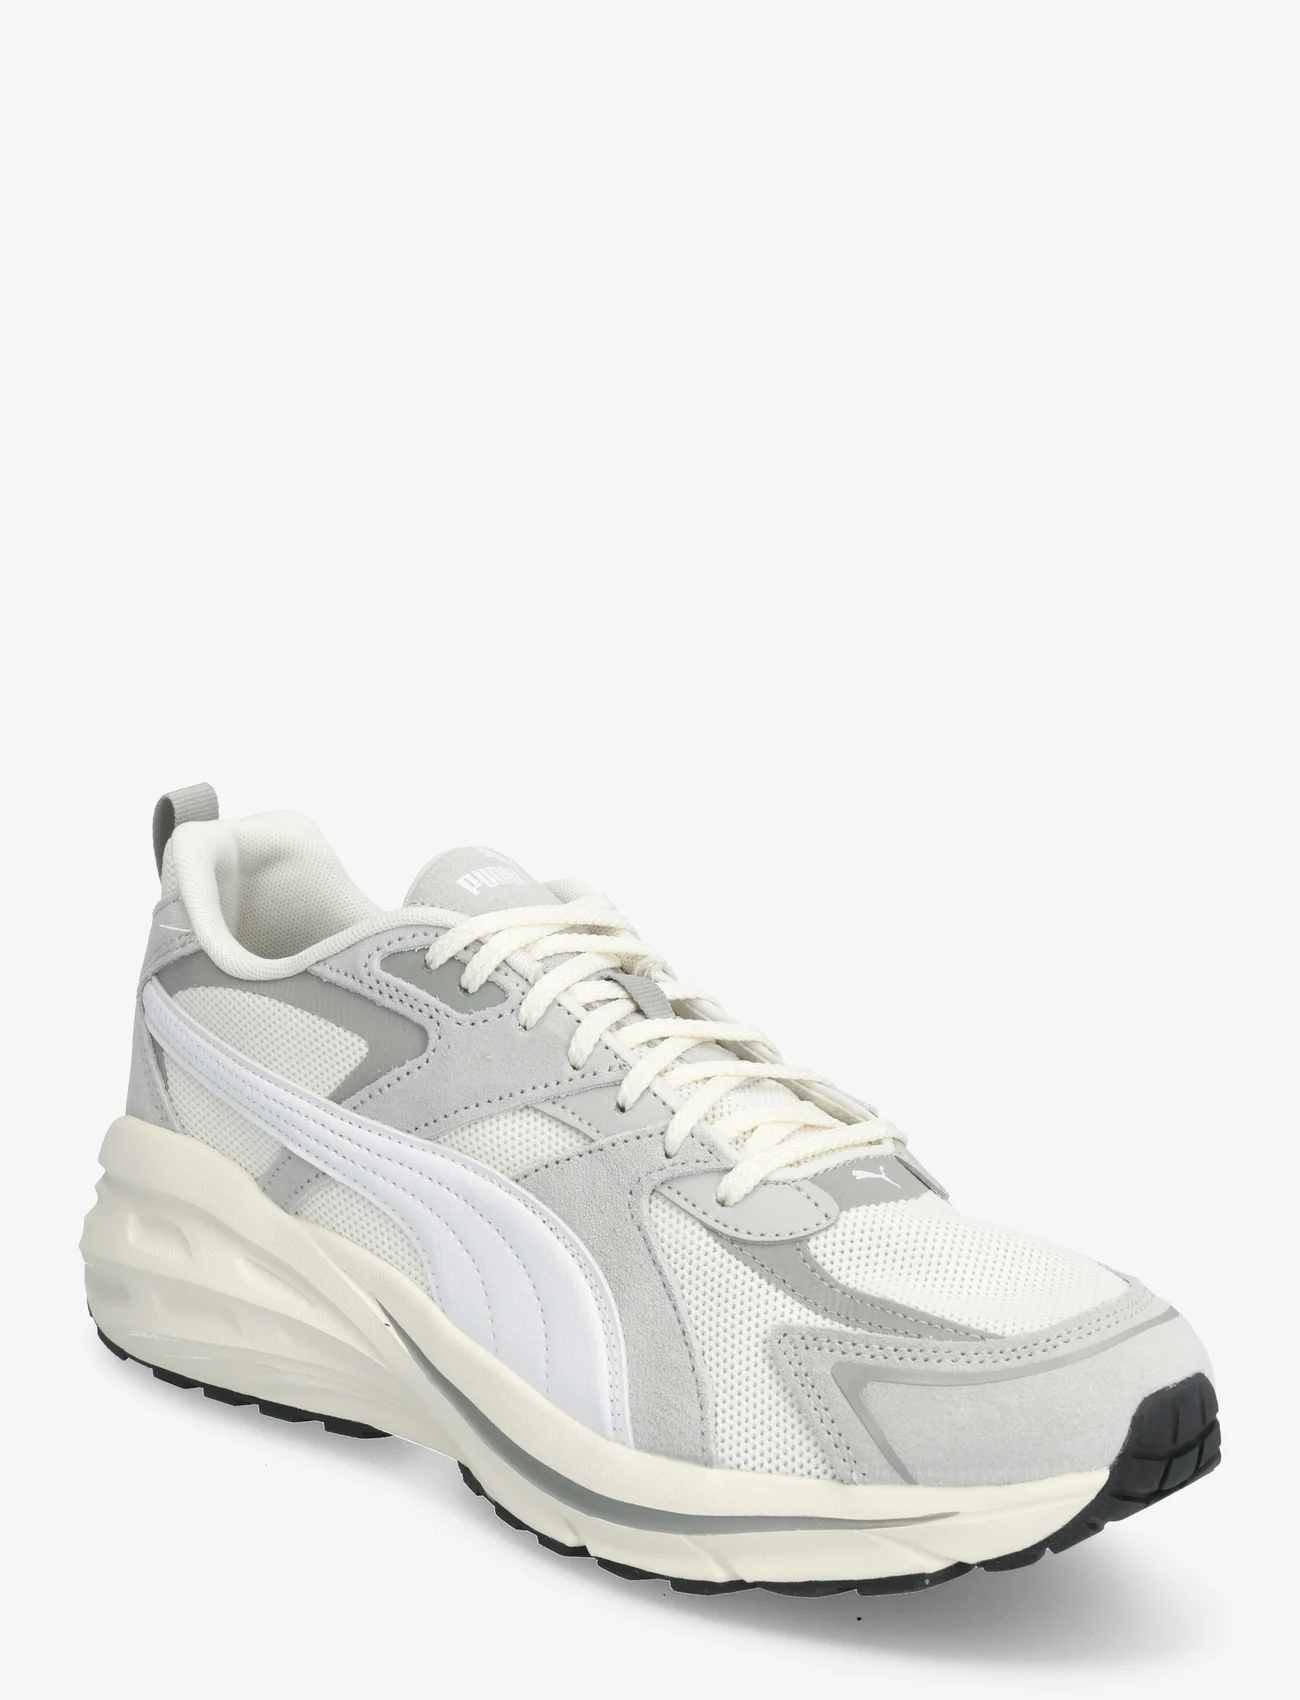 PUMA - Hypnotic LS - shoes - warm white-puma white-glacial gray - 0